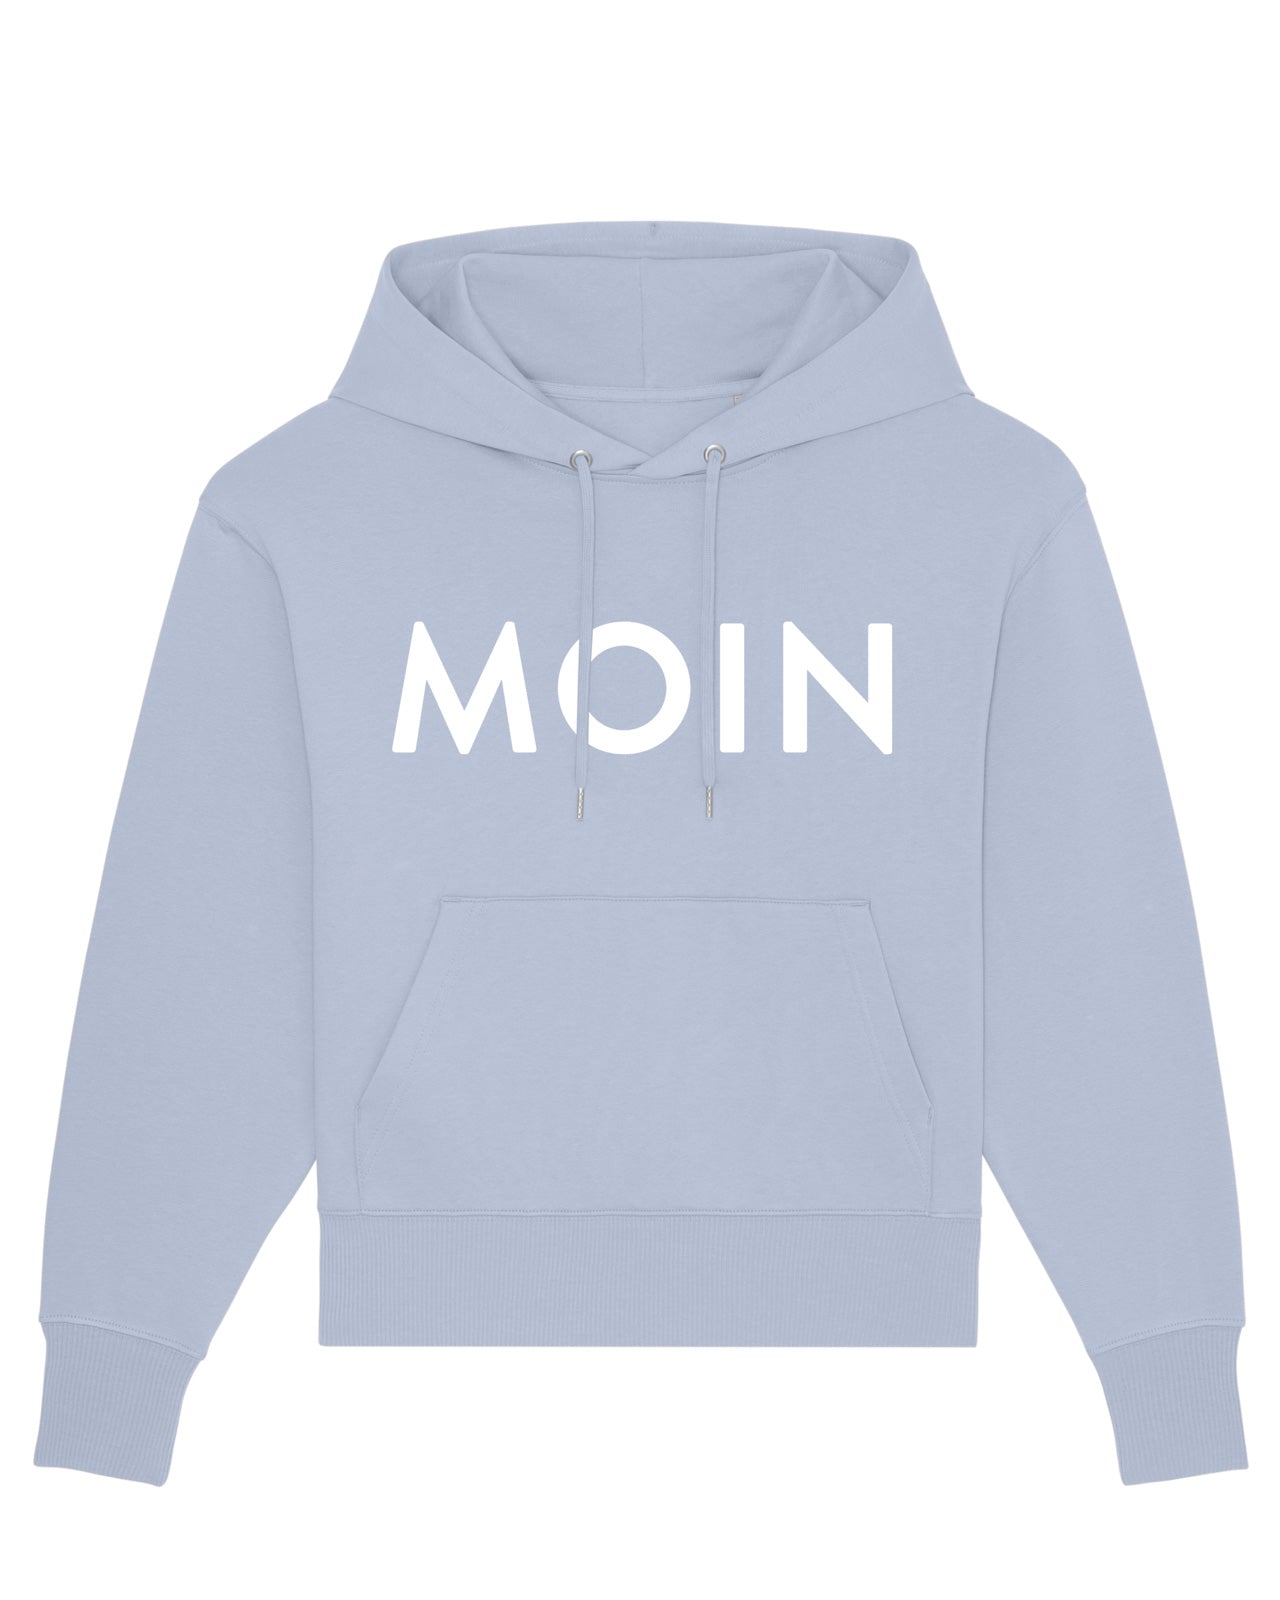 Hoodie "Moin" Serene Blue/Weiß